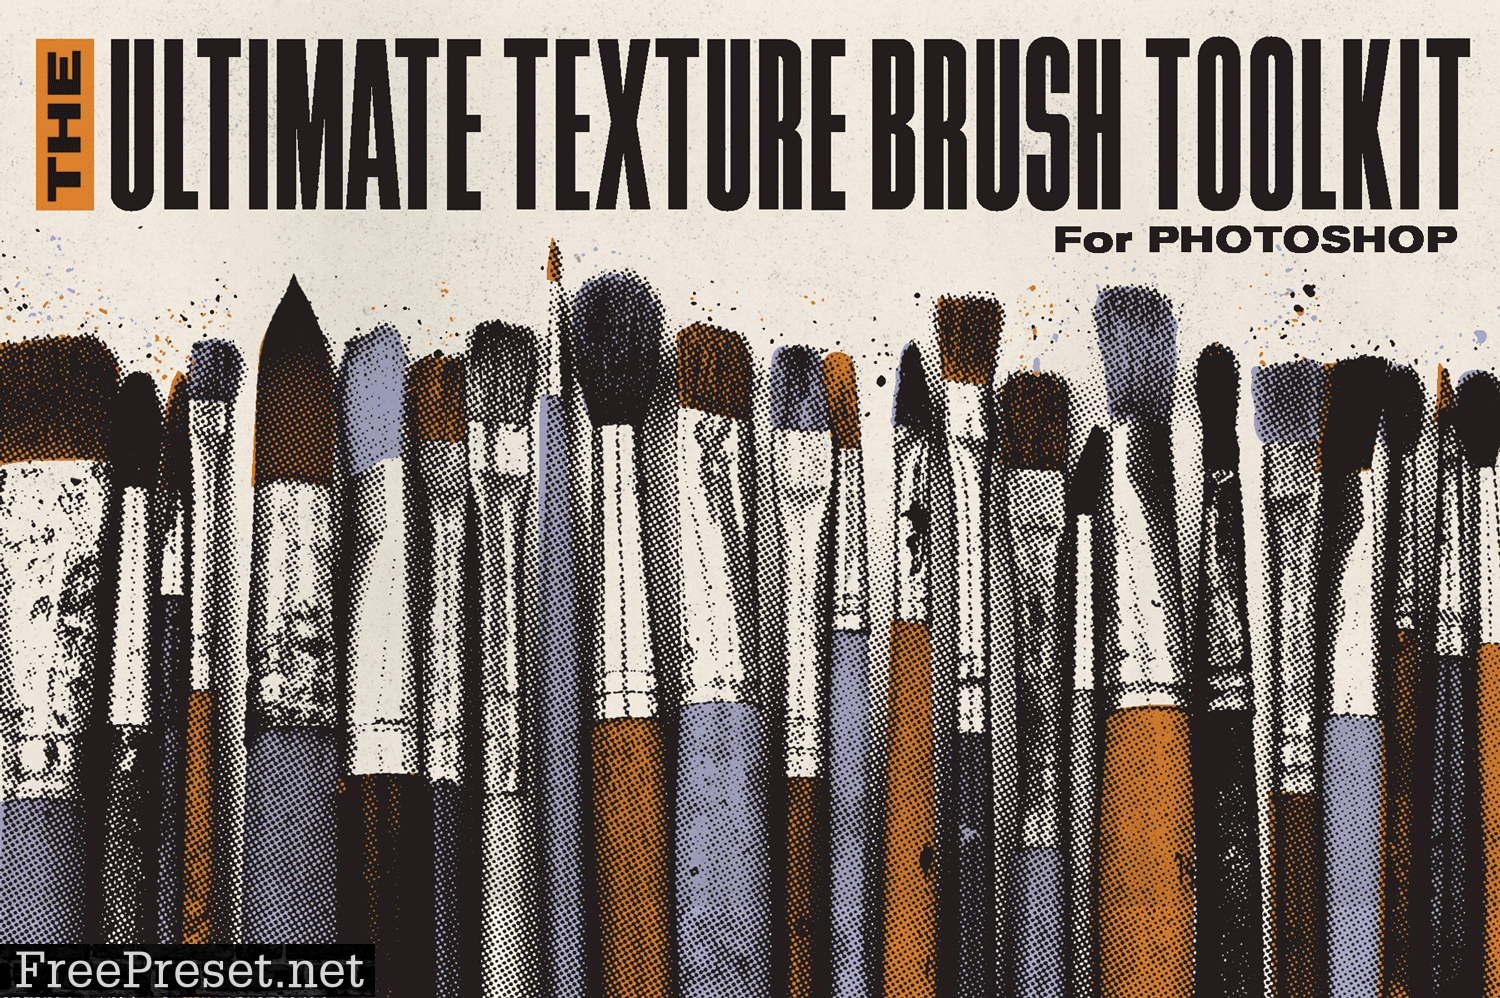 Truegrittexturesupply - The Ultimate Texture Brush Toolkit